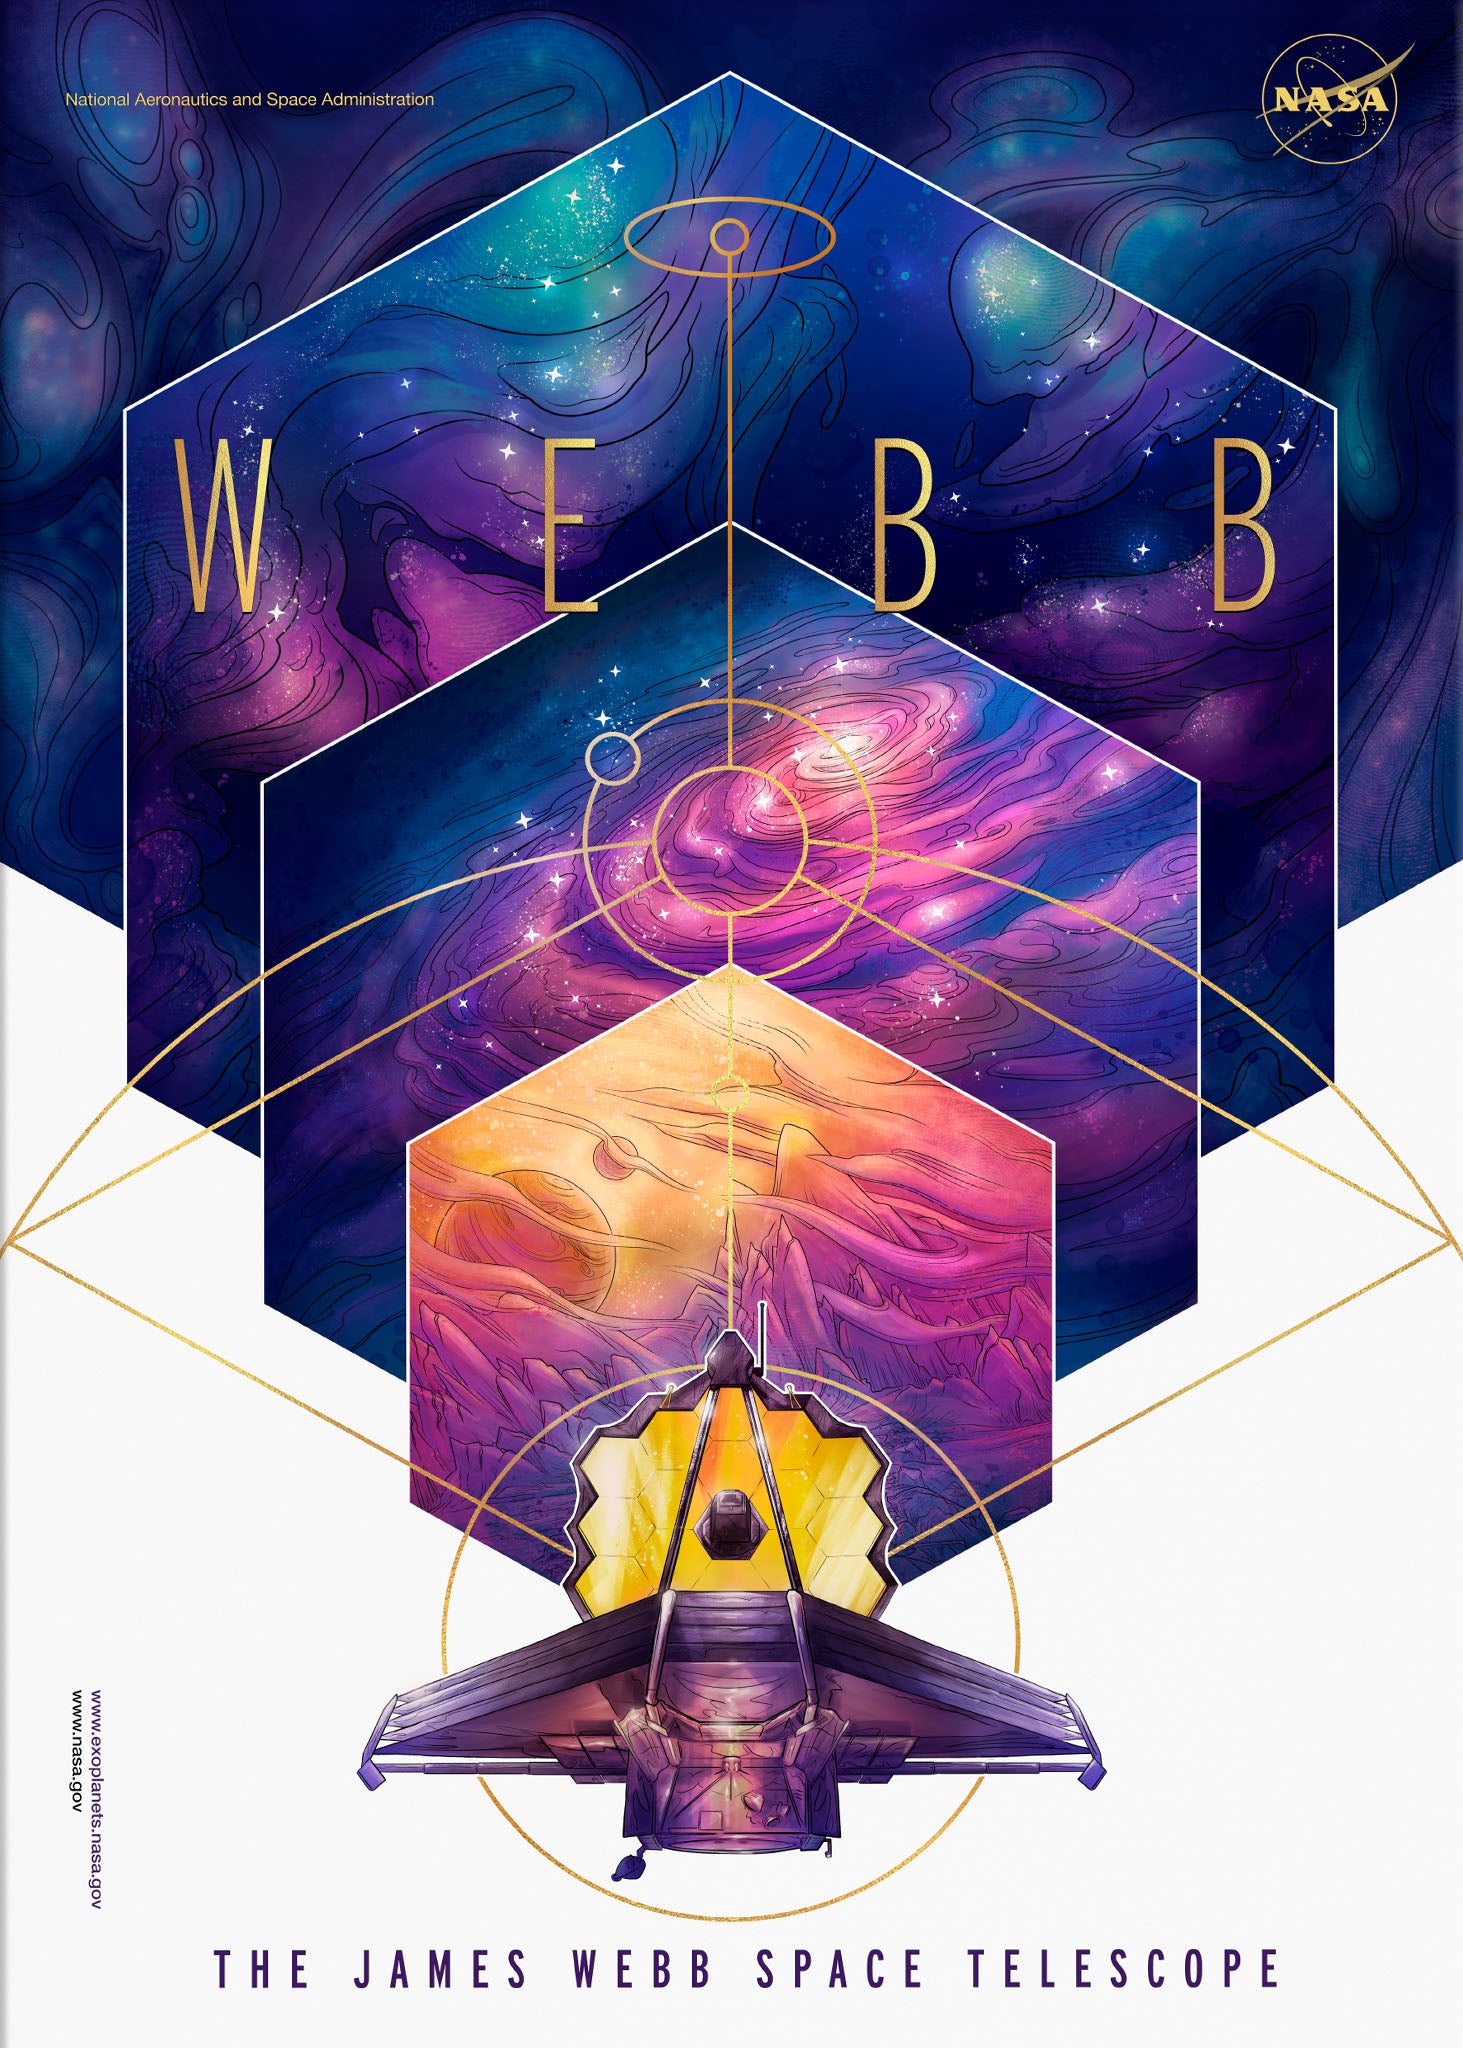 Kosmiczny Teleskop Jamesa Webba Plakat NASA